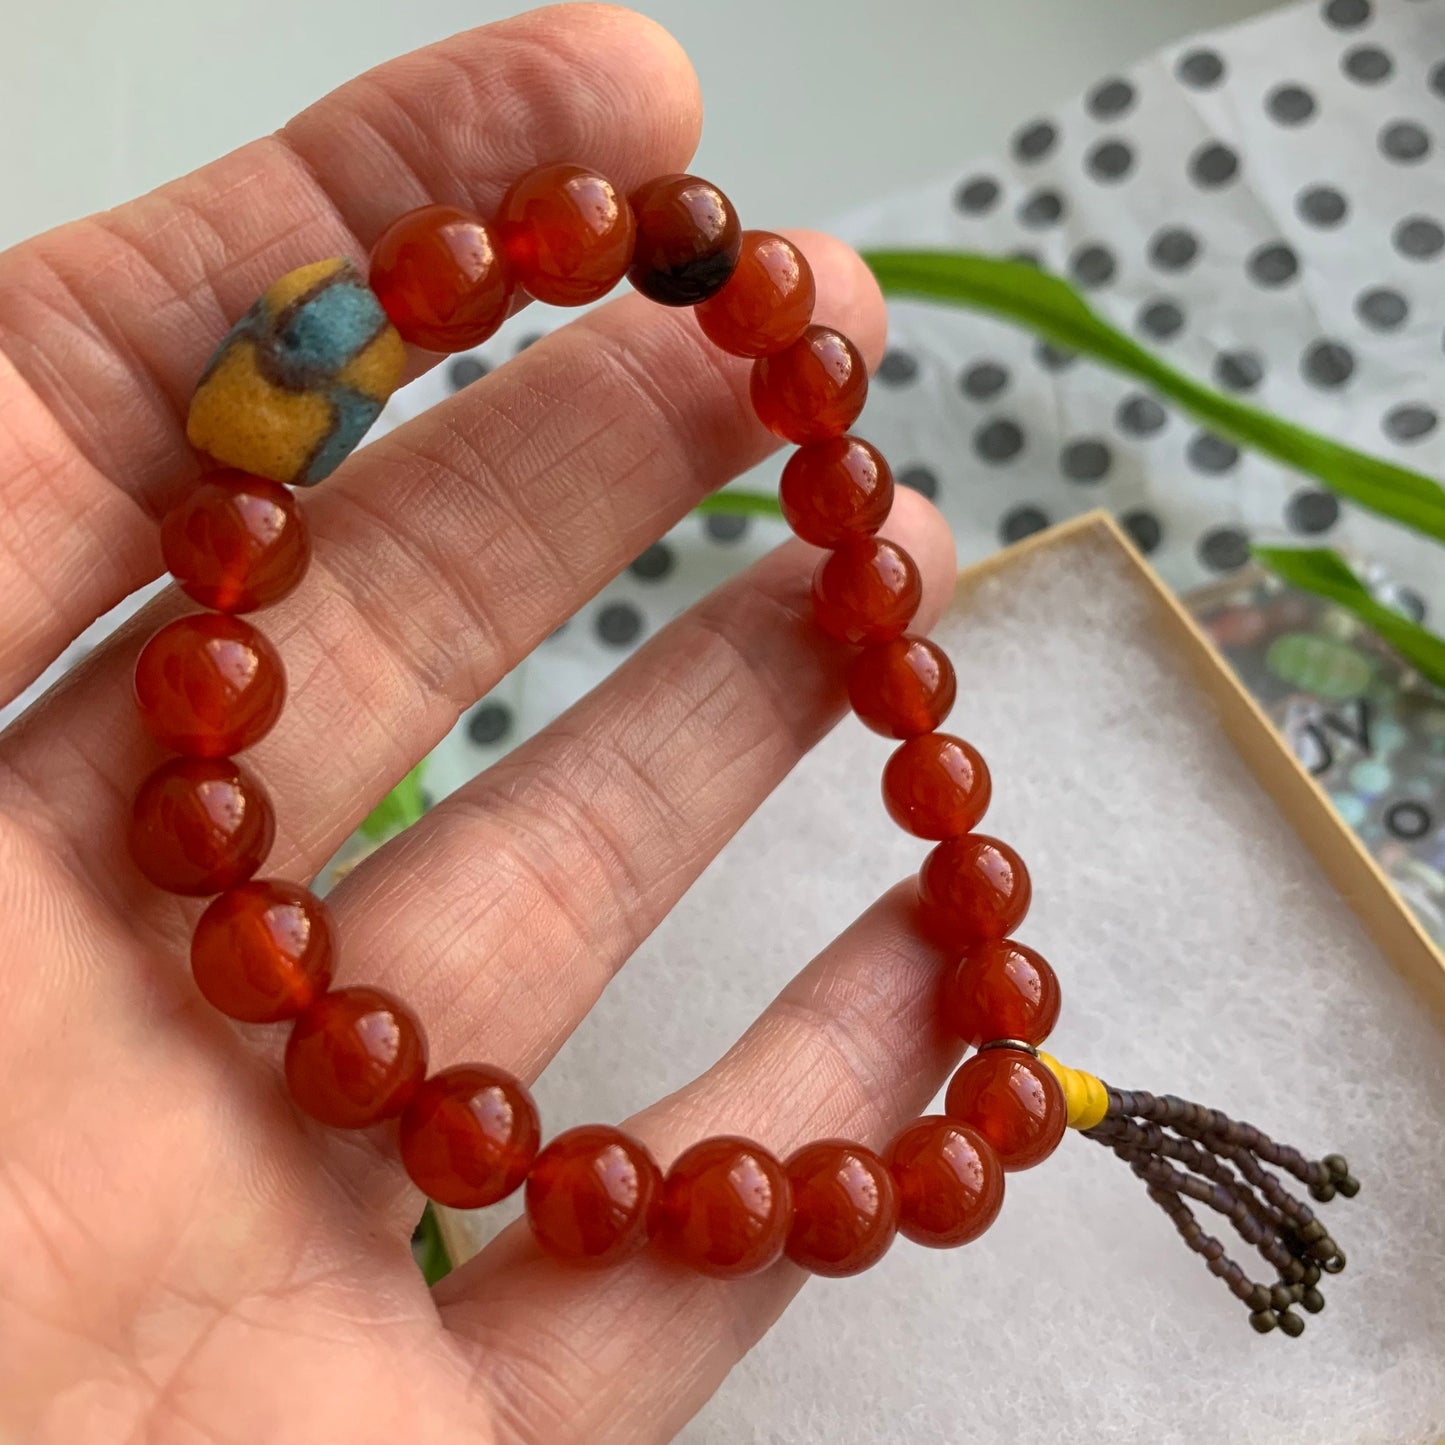 Carnelian bracelet - stretchy mala bracelet with tassel - boho jewelry for women - handmade beaded jewelry - gifts for yoga moms